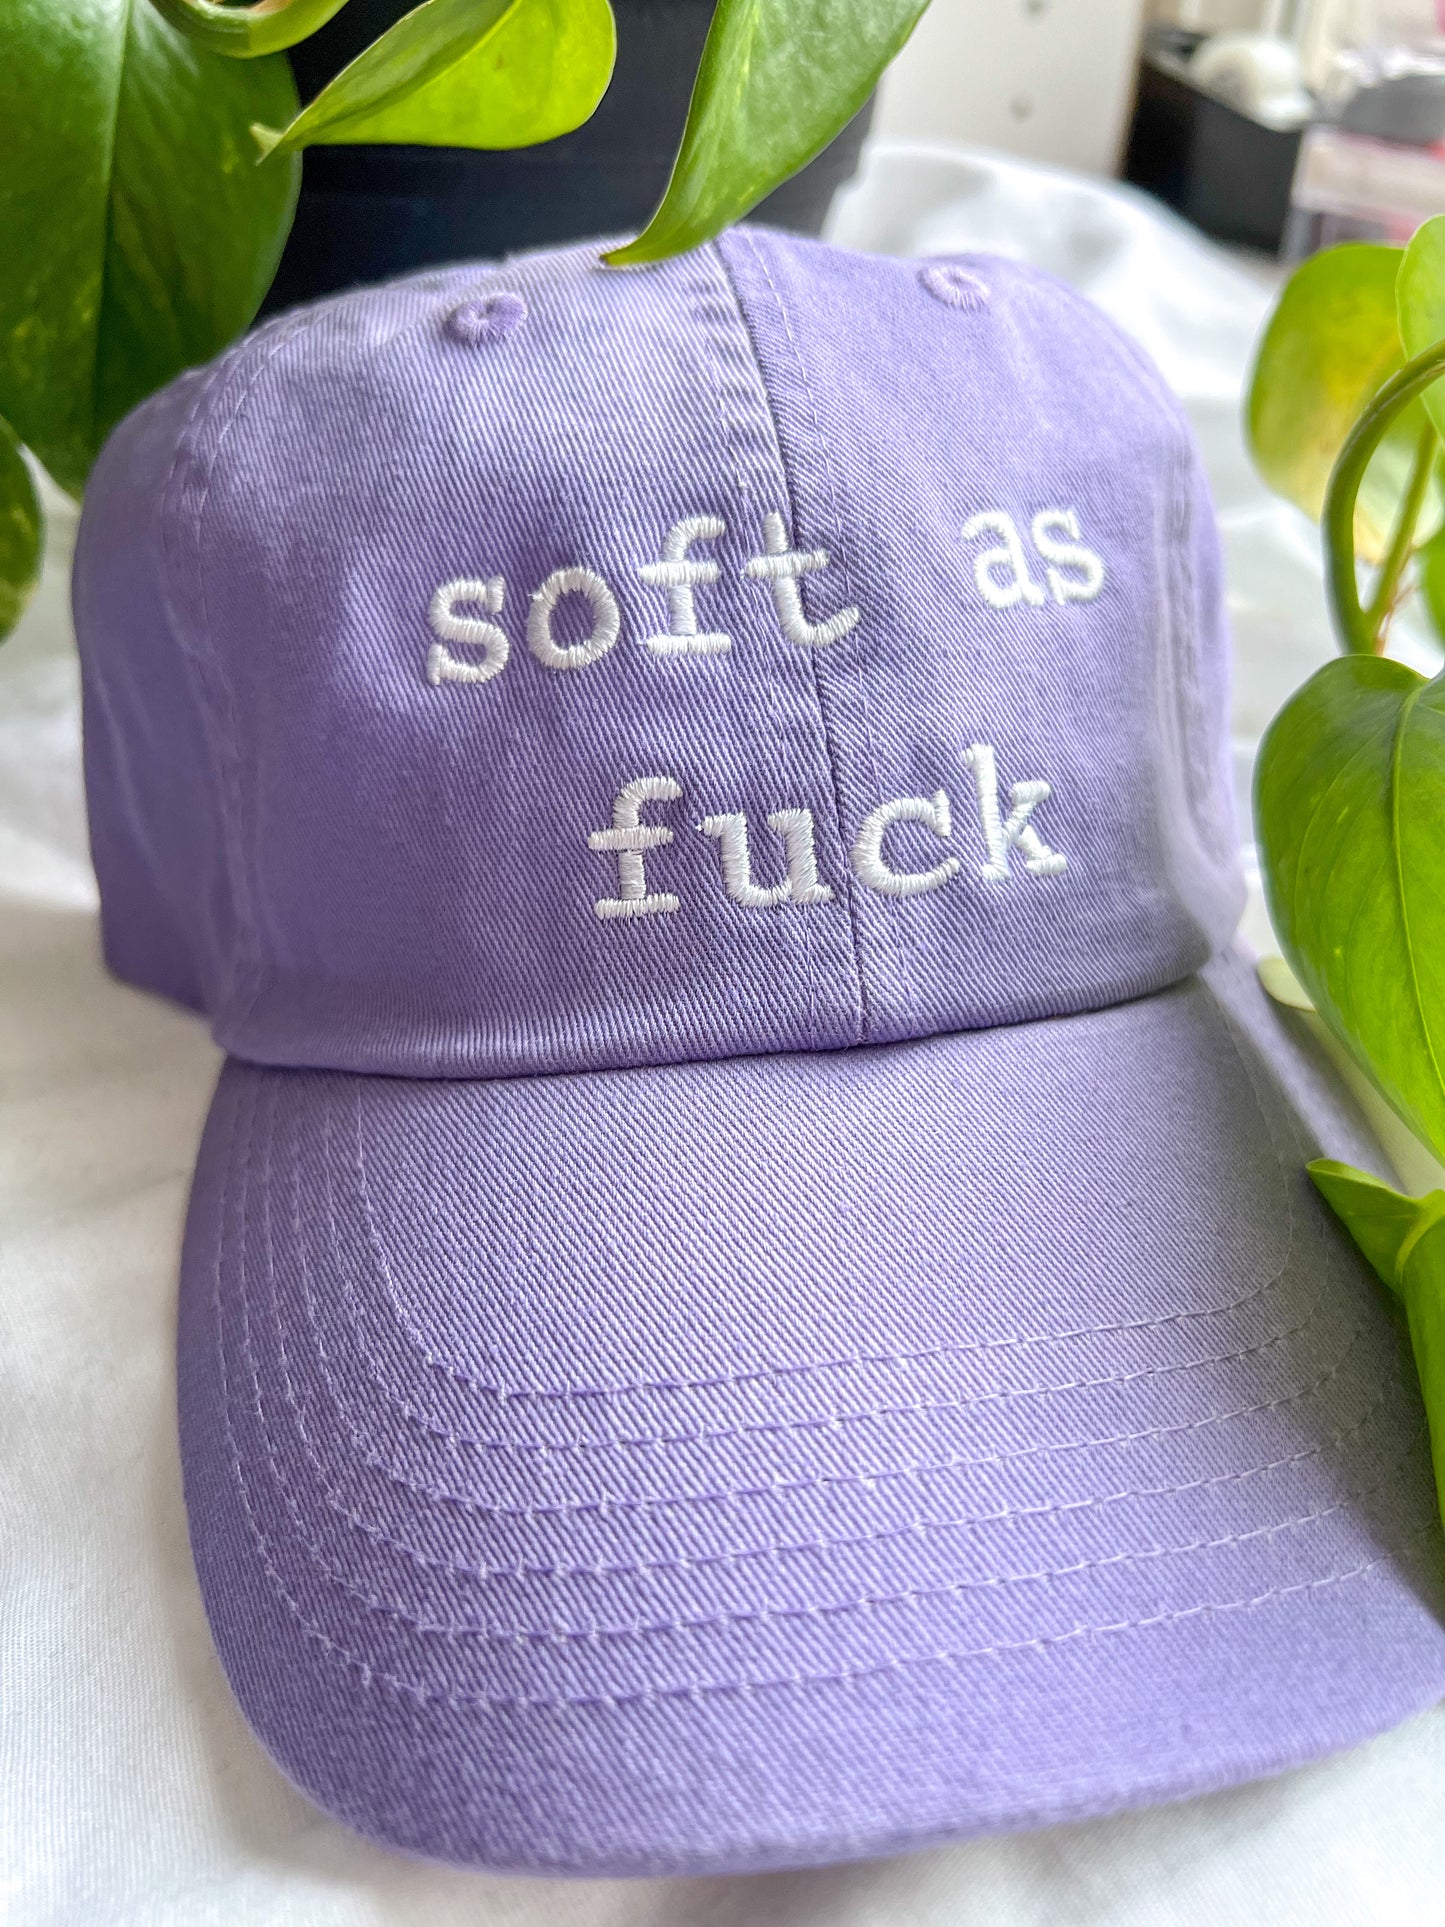 soft as fuck cap